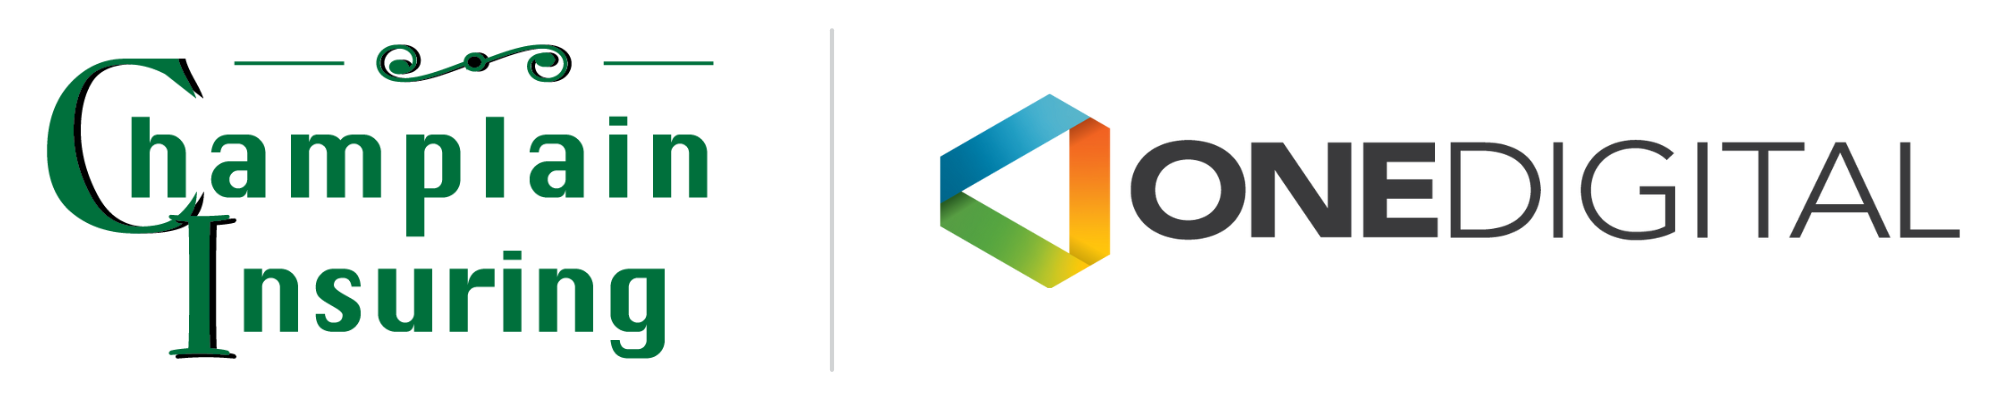 Champlain Insuring and OneDigital Logo